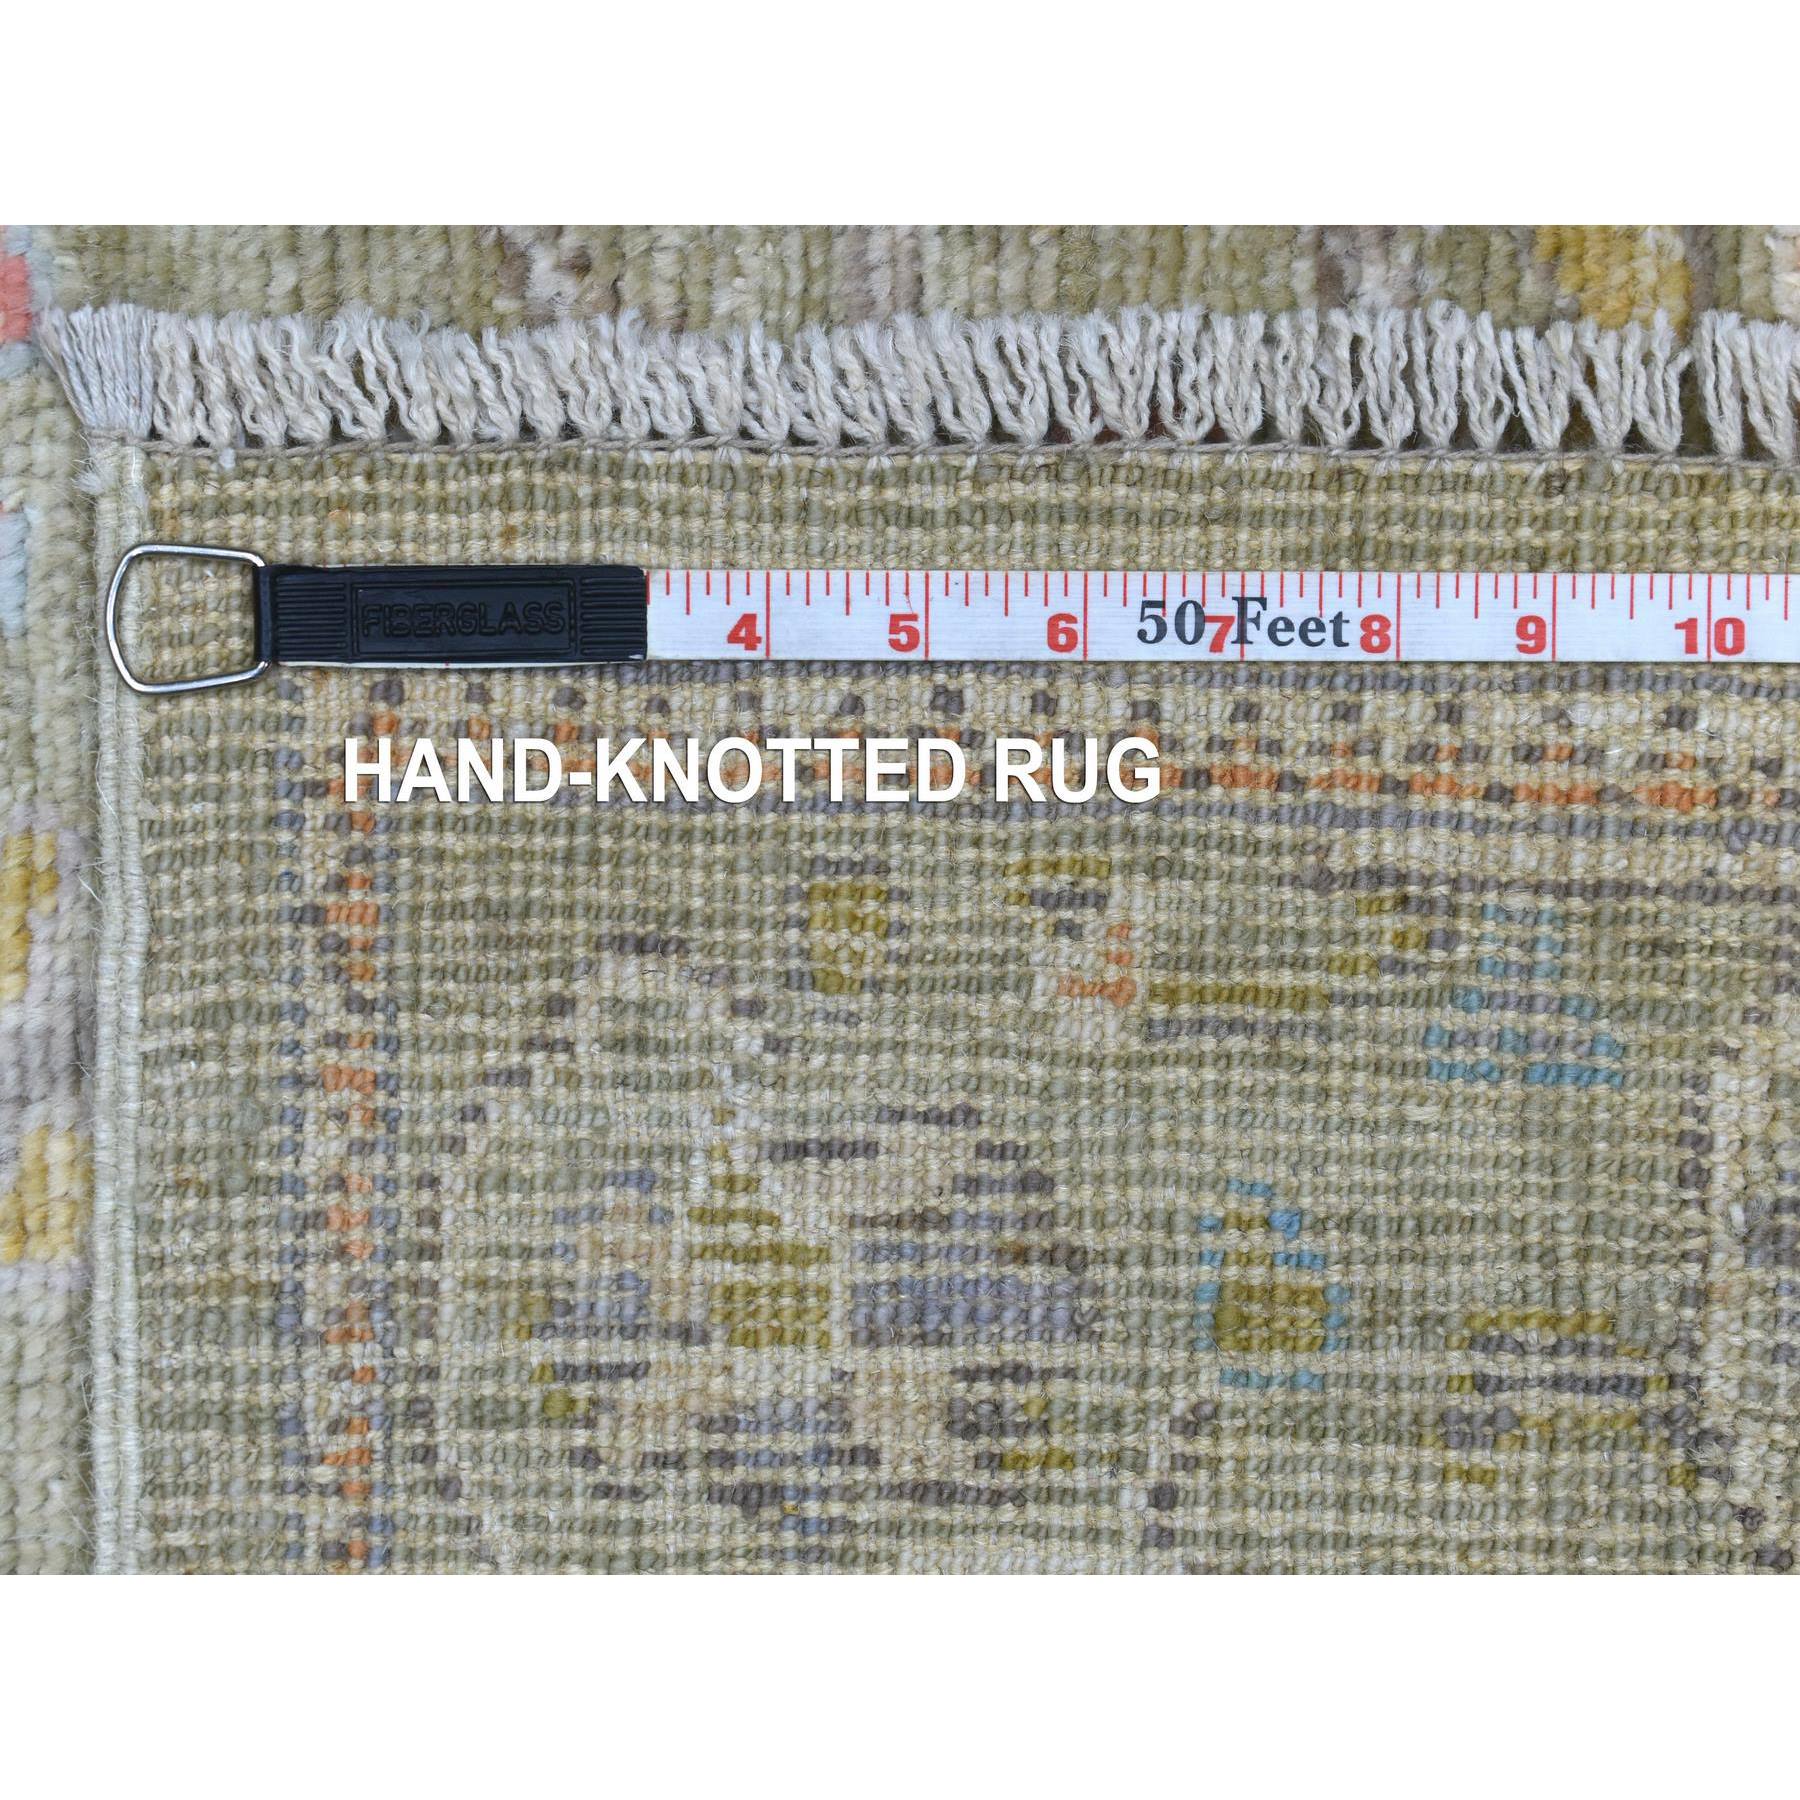 2'8"x11'5" Olive Green Hand Woven Angora Ushak with Leaf Design Soft, Afghan Wool Oriental Runner Rug 